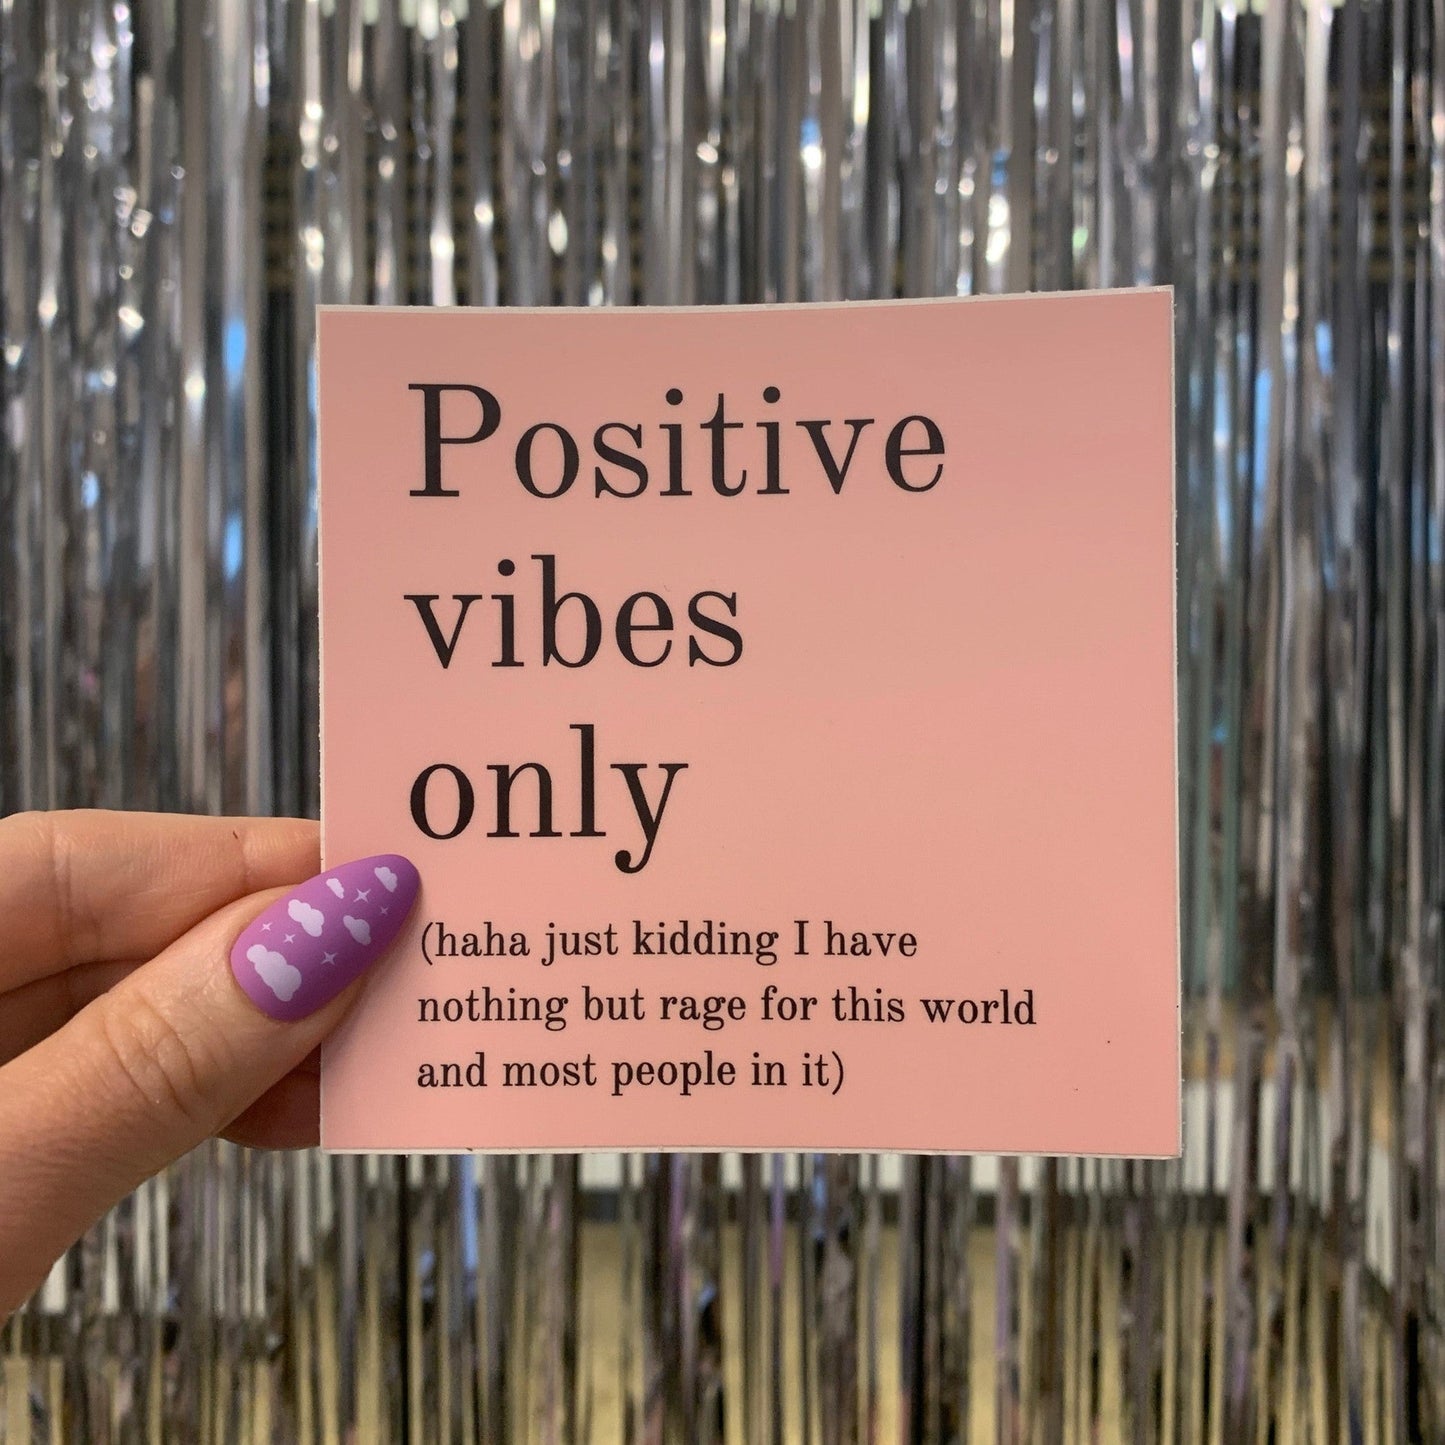 Positive Vibes Only (Plus Rage) Vinyl Weatherproof Sticker in Blush Pink